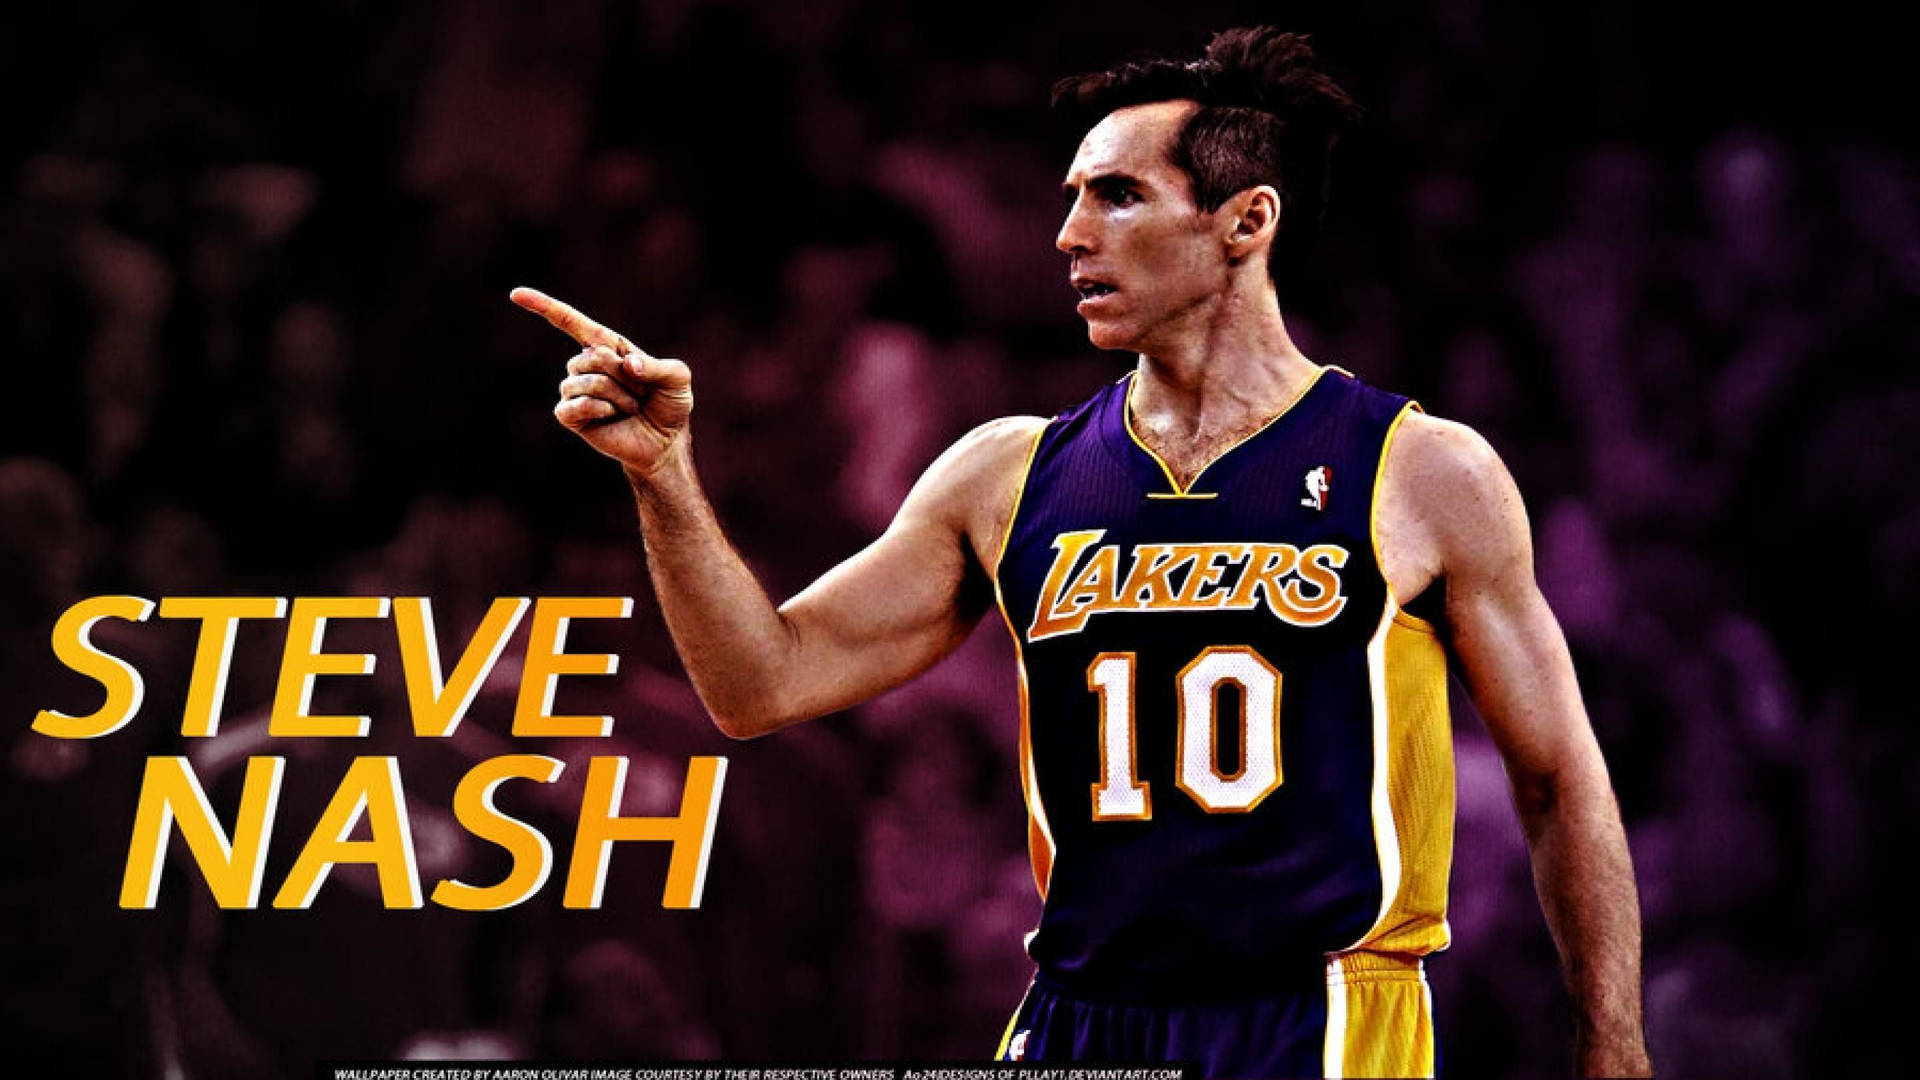 Stevenash Lakers Pekar Wallpaper